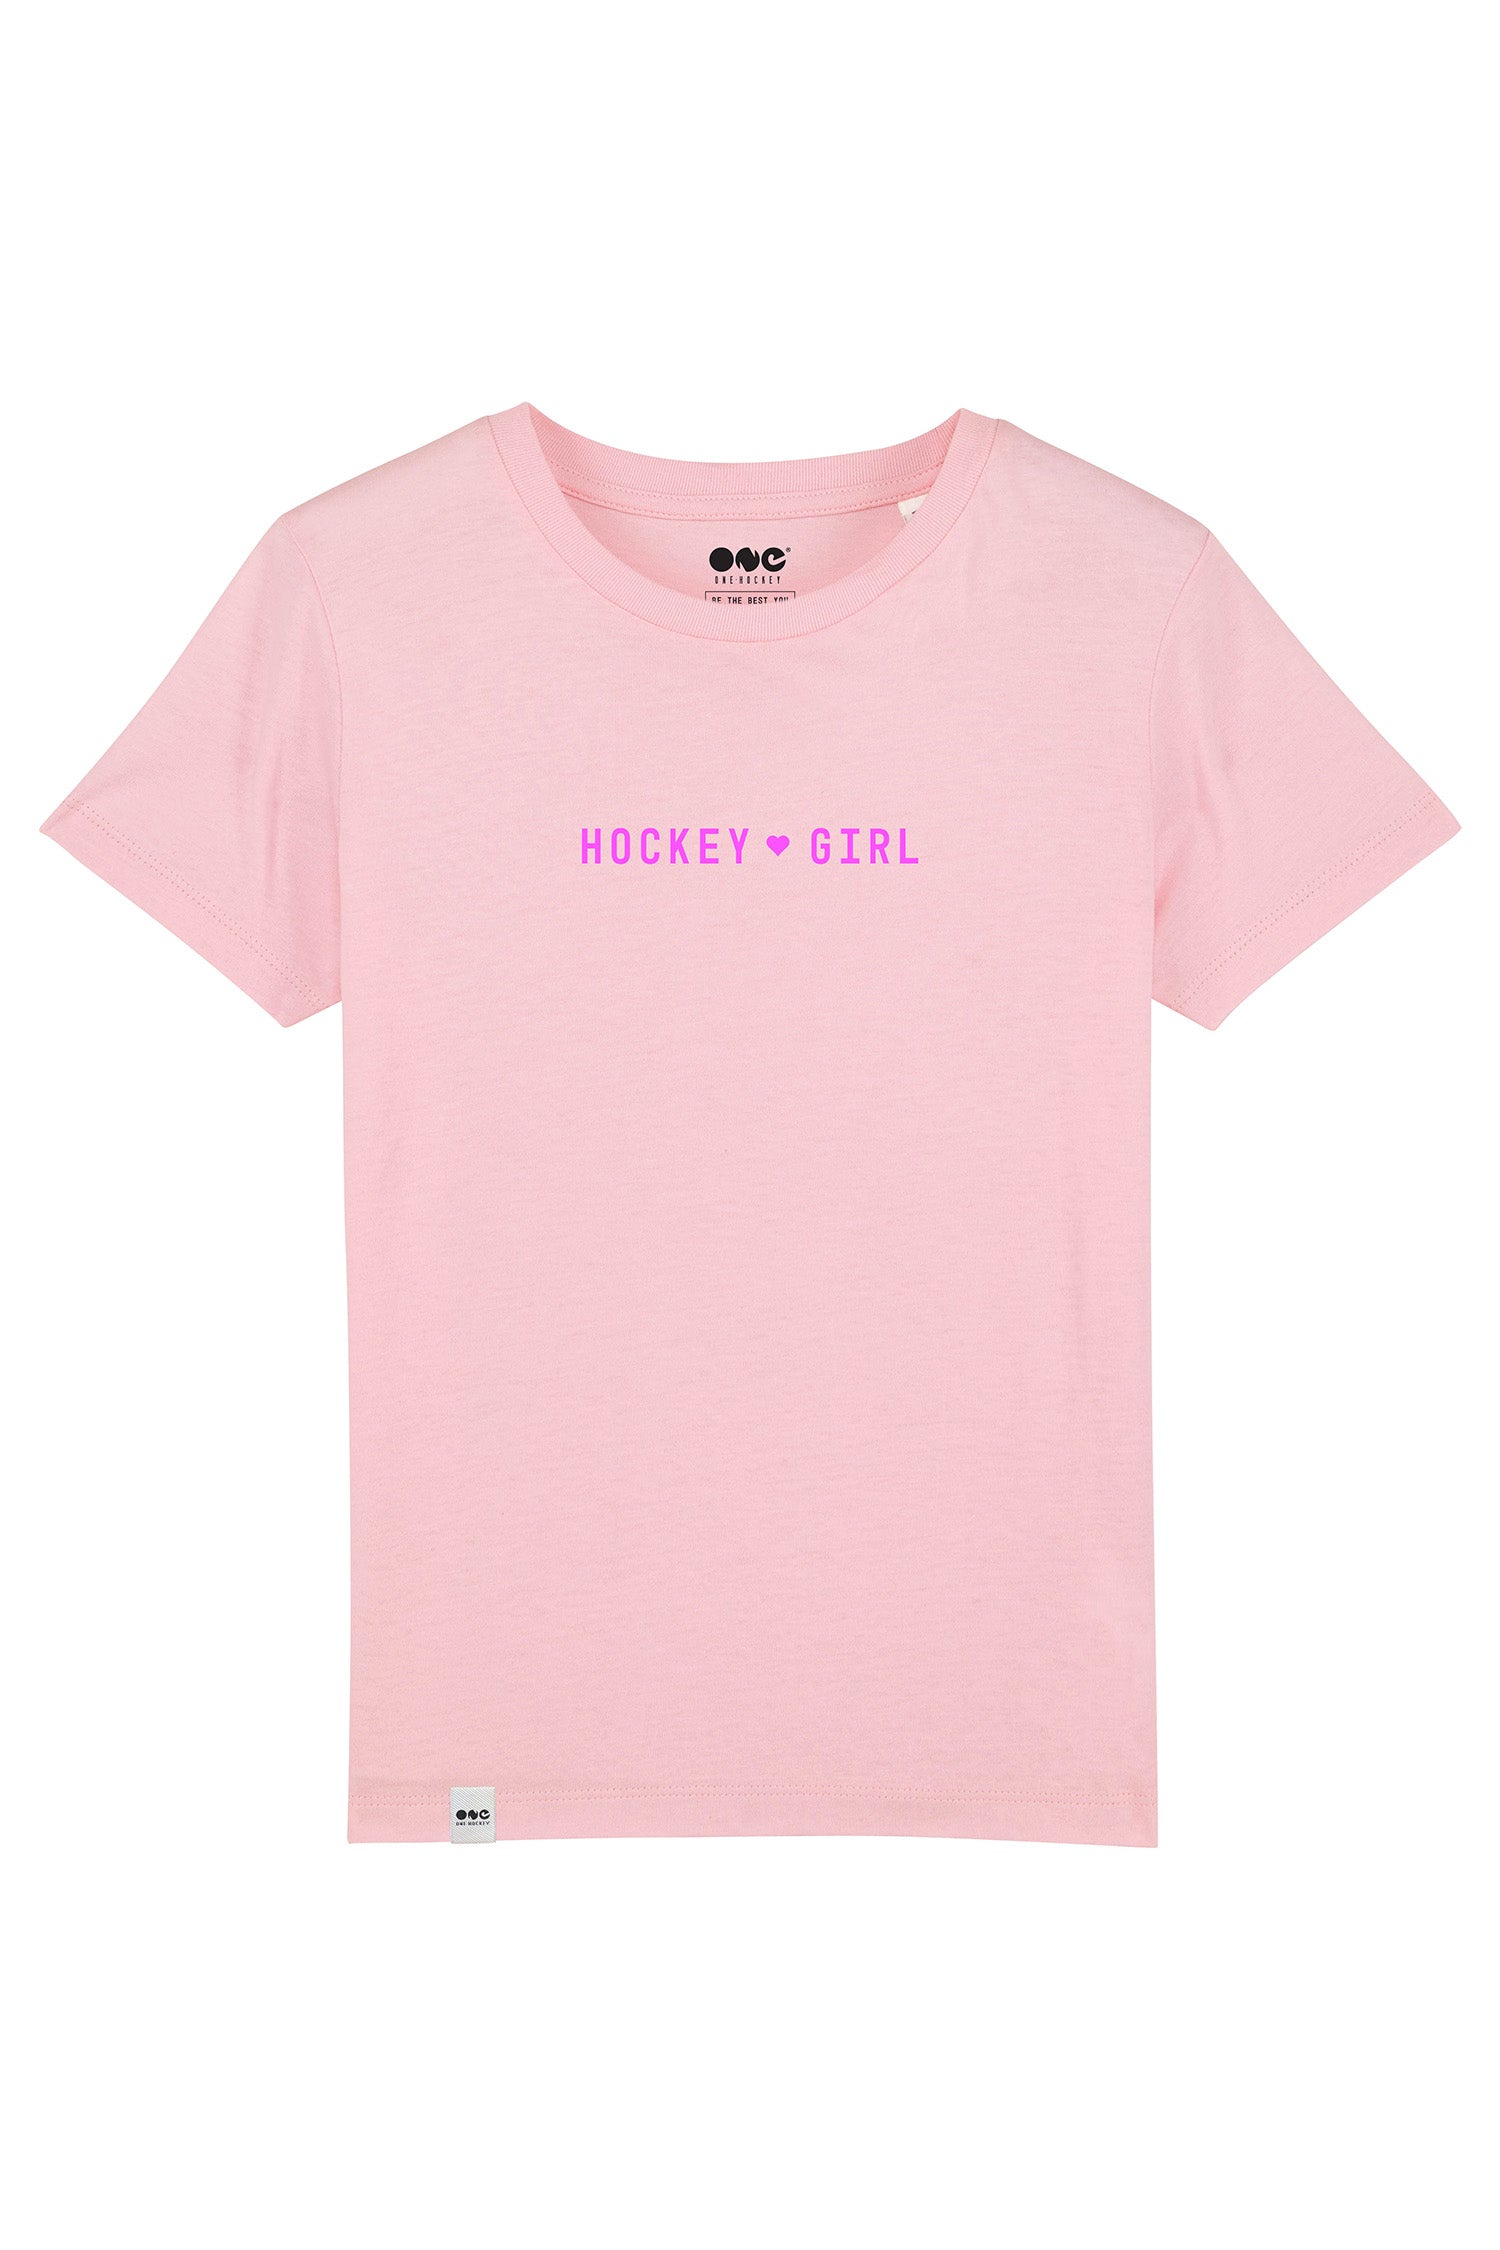 T-shirt Hockey Girl - 2 colours